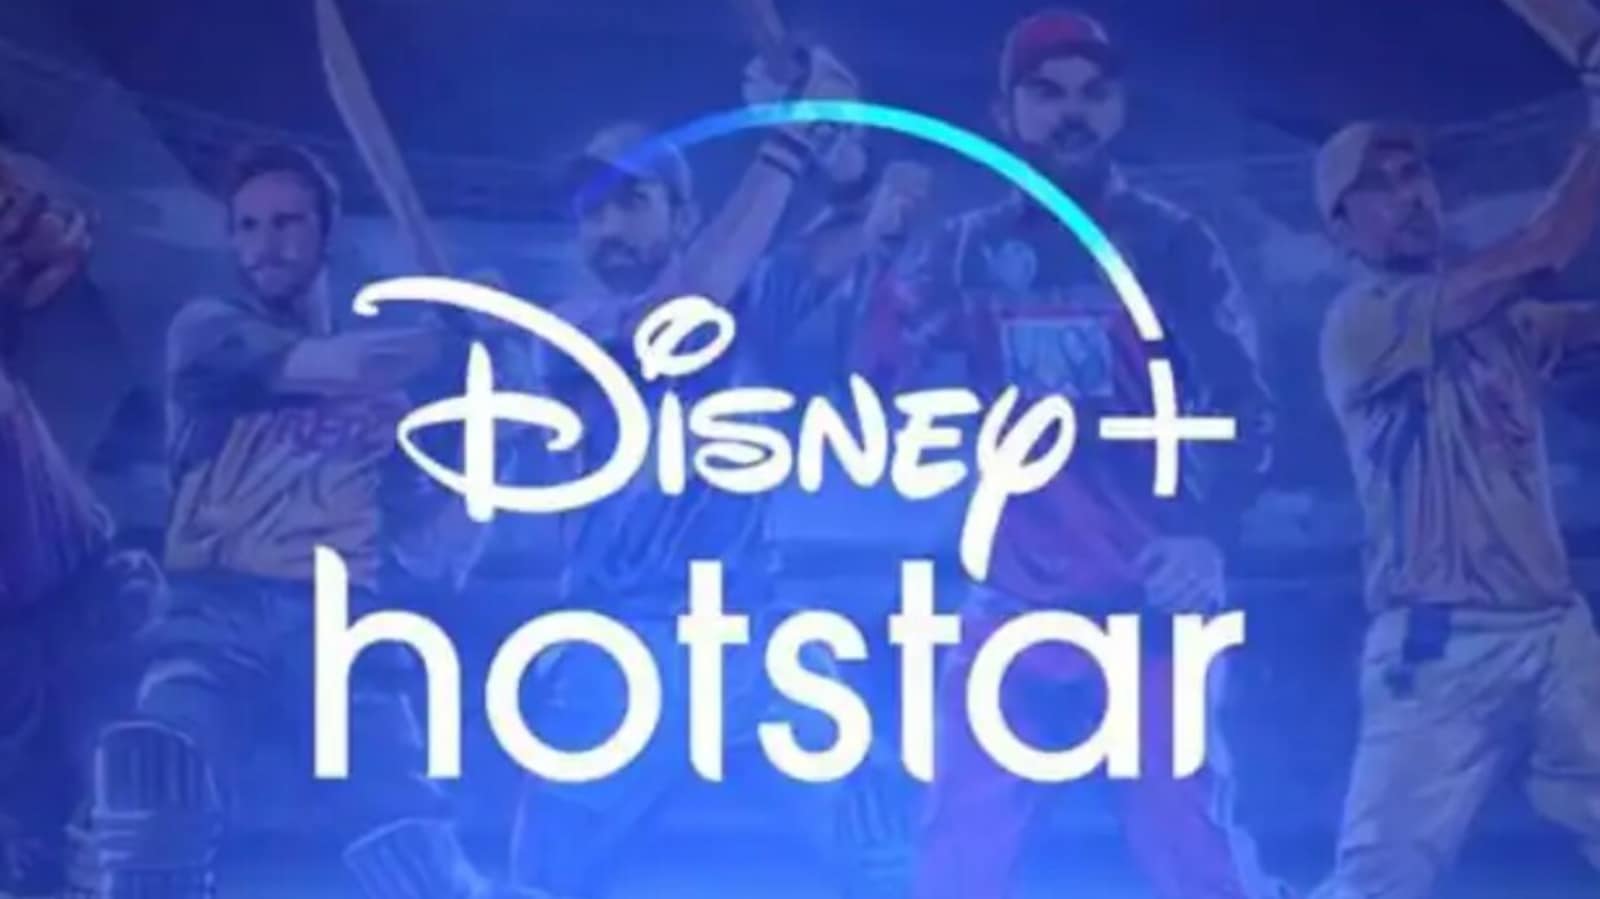 upGrad associates with Star Sports, Disney+Hotstar for VIVO IPL 2021 |  SportsMint Media